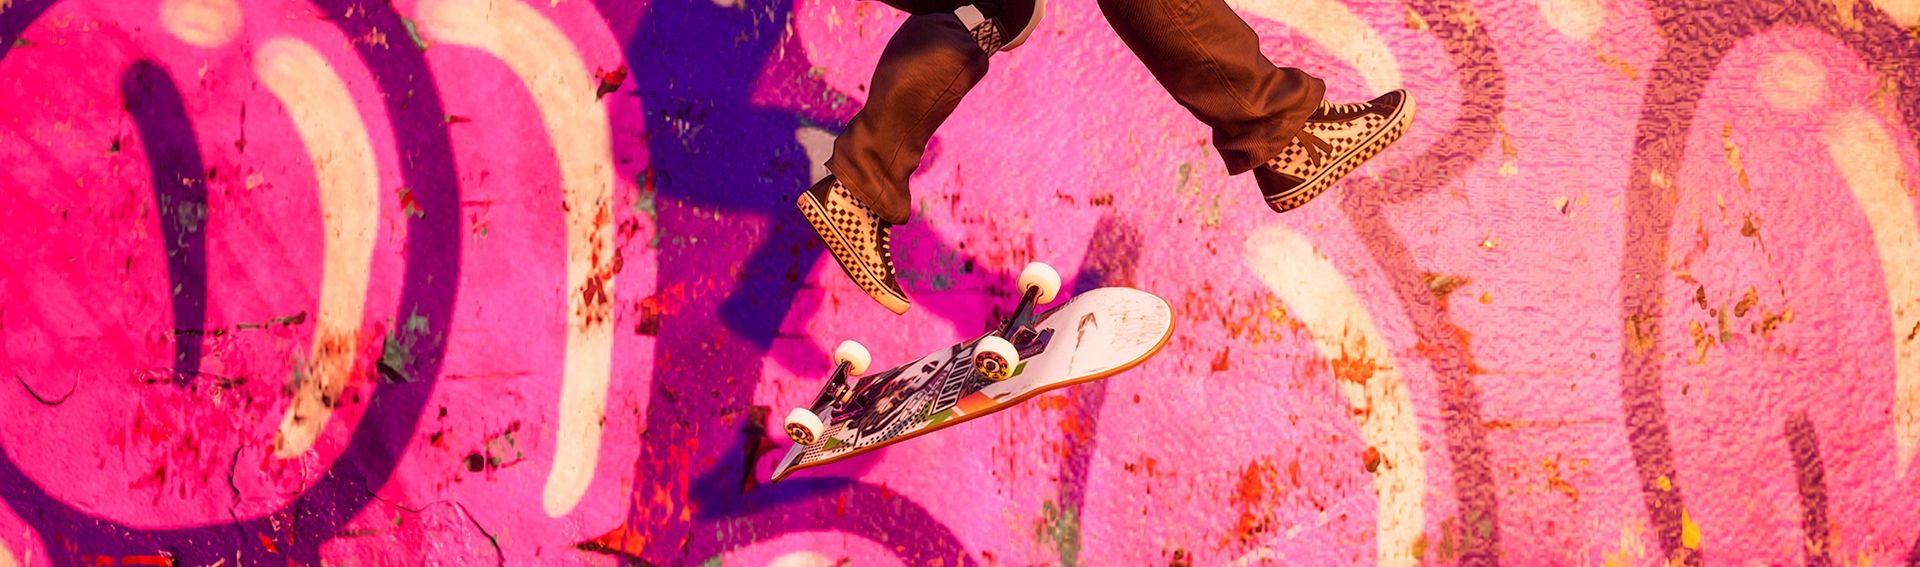 Tony Hawk's character flipping a board mid-air near wall with pink graffiti